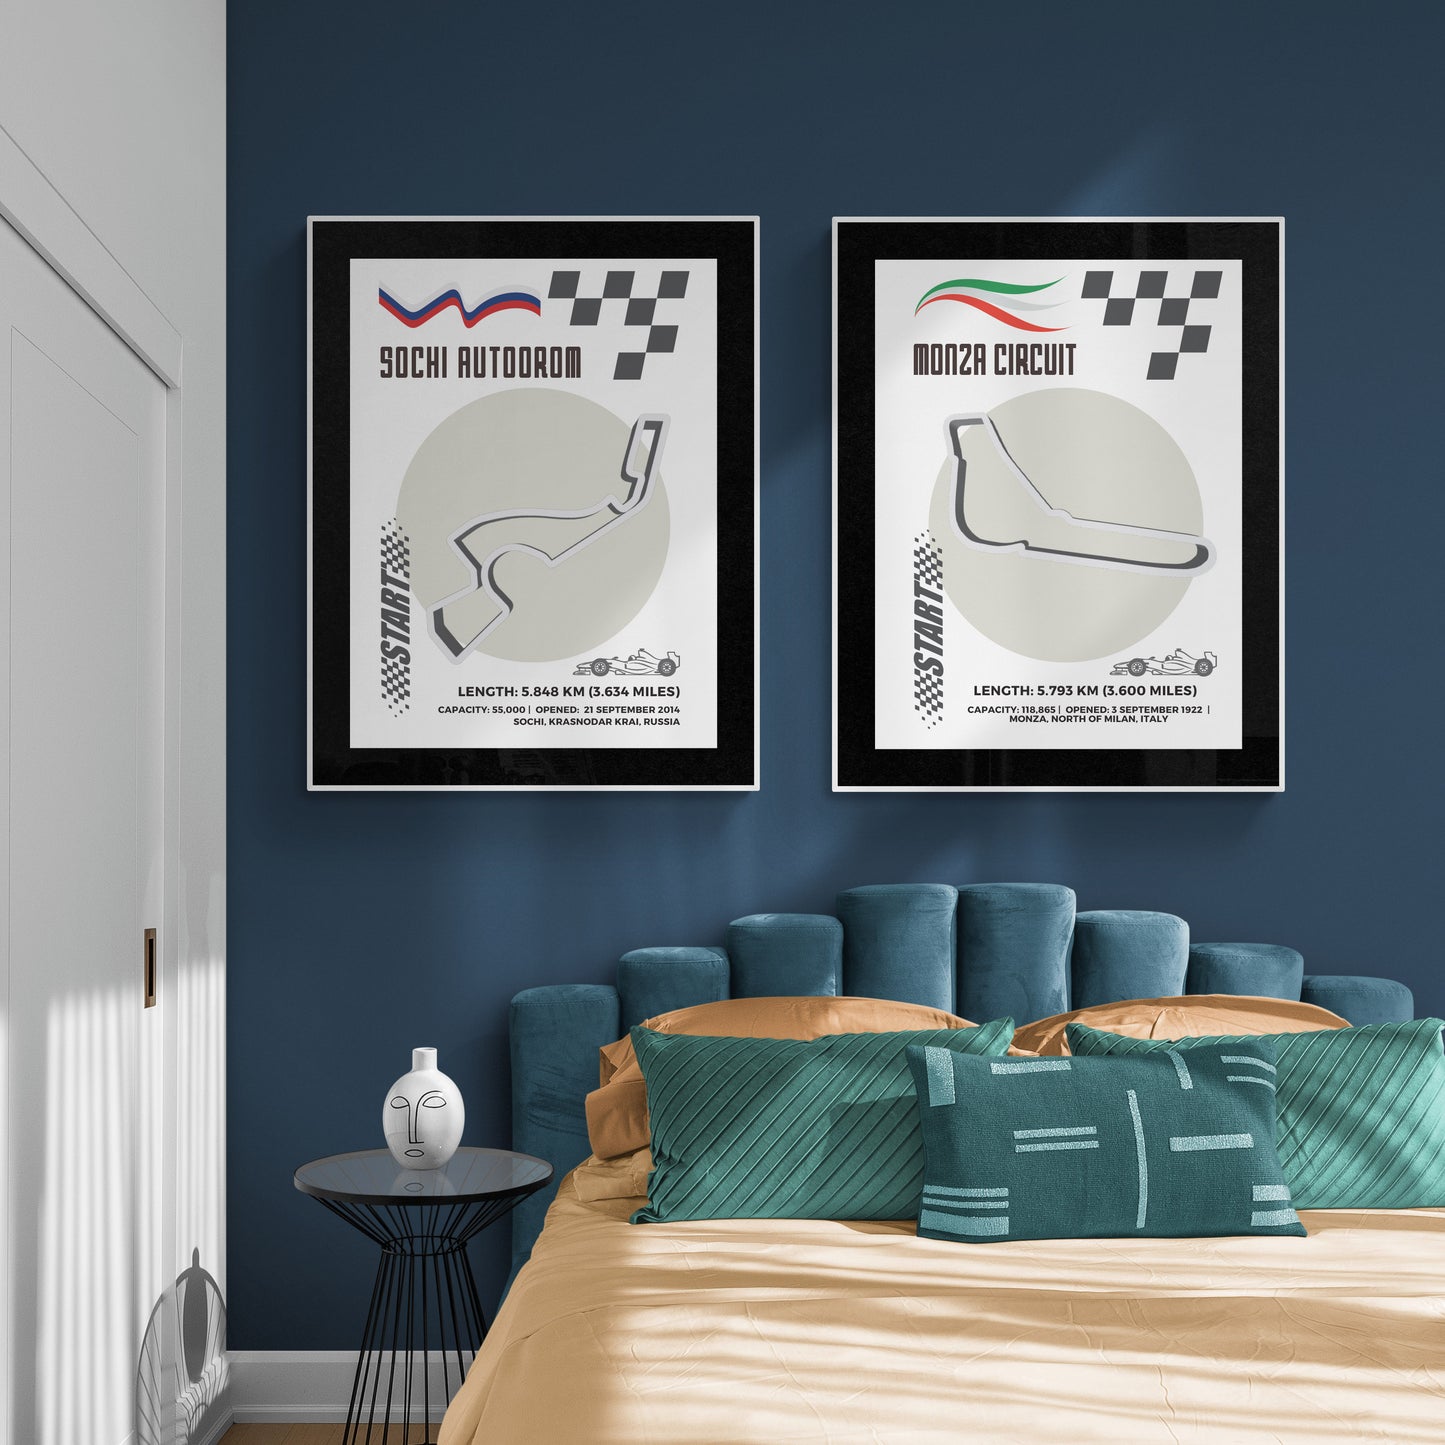 Interlagos Circuit F1 Posters